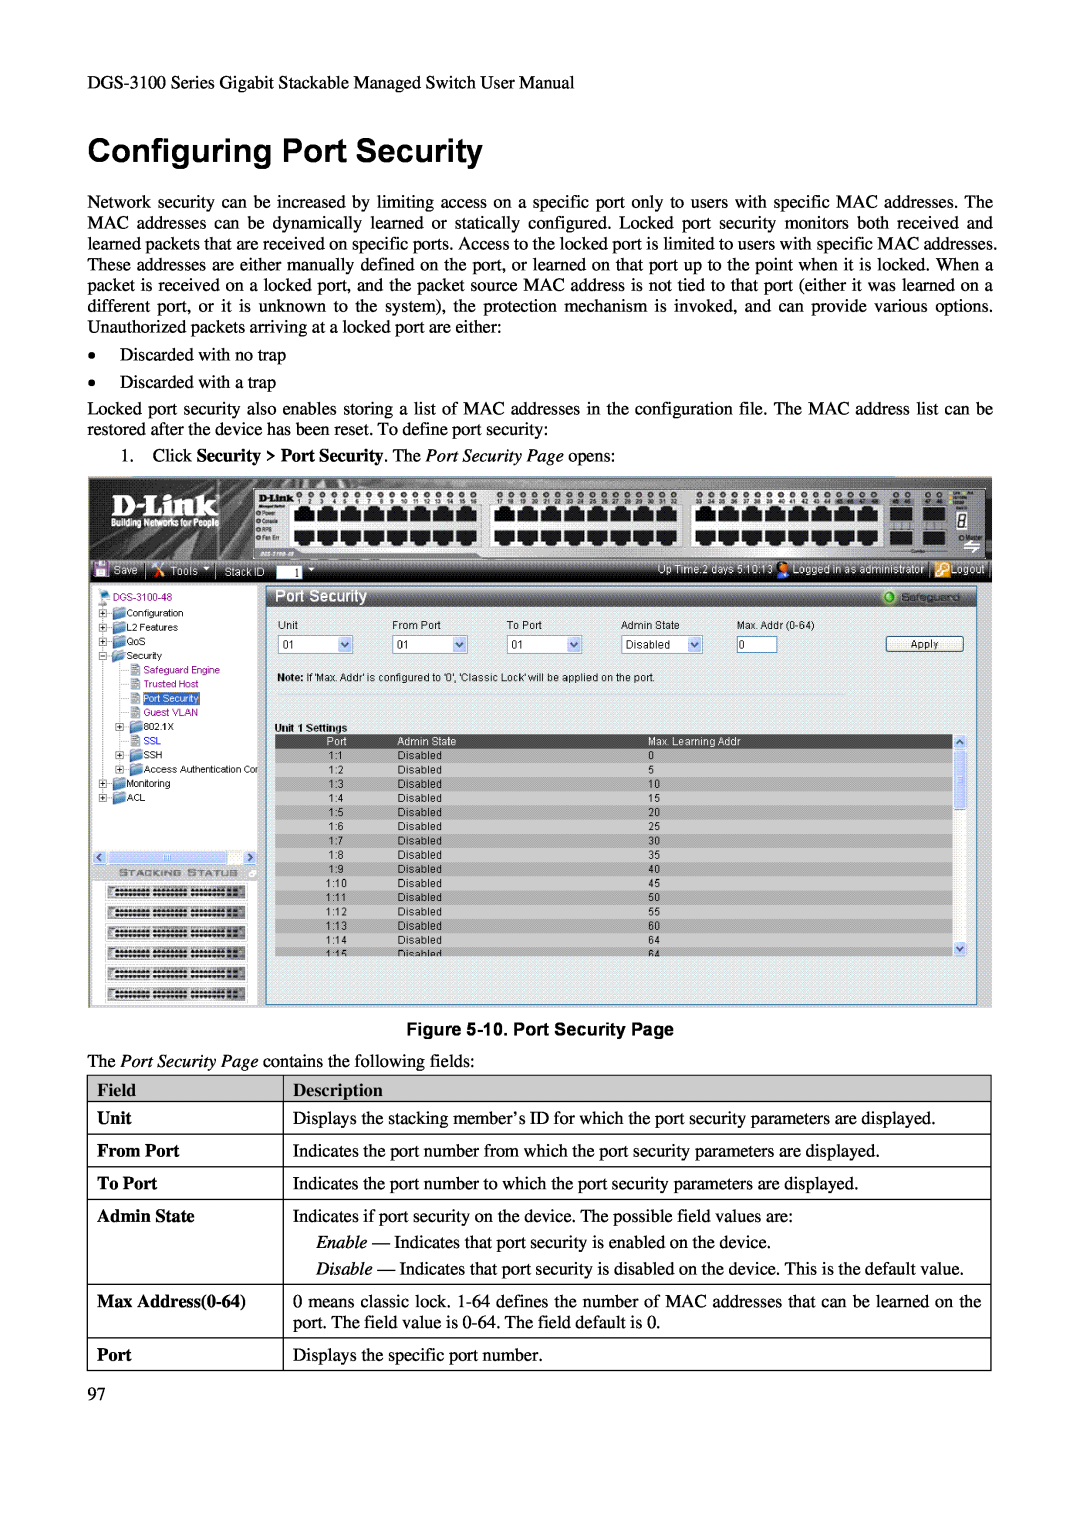 D-Link DGS-3100 Configuring Port Security, Click Security Port Security. The Port Security Page opens, Description 